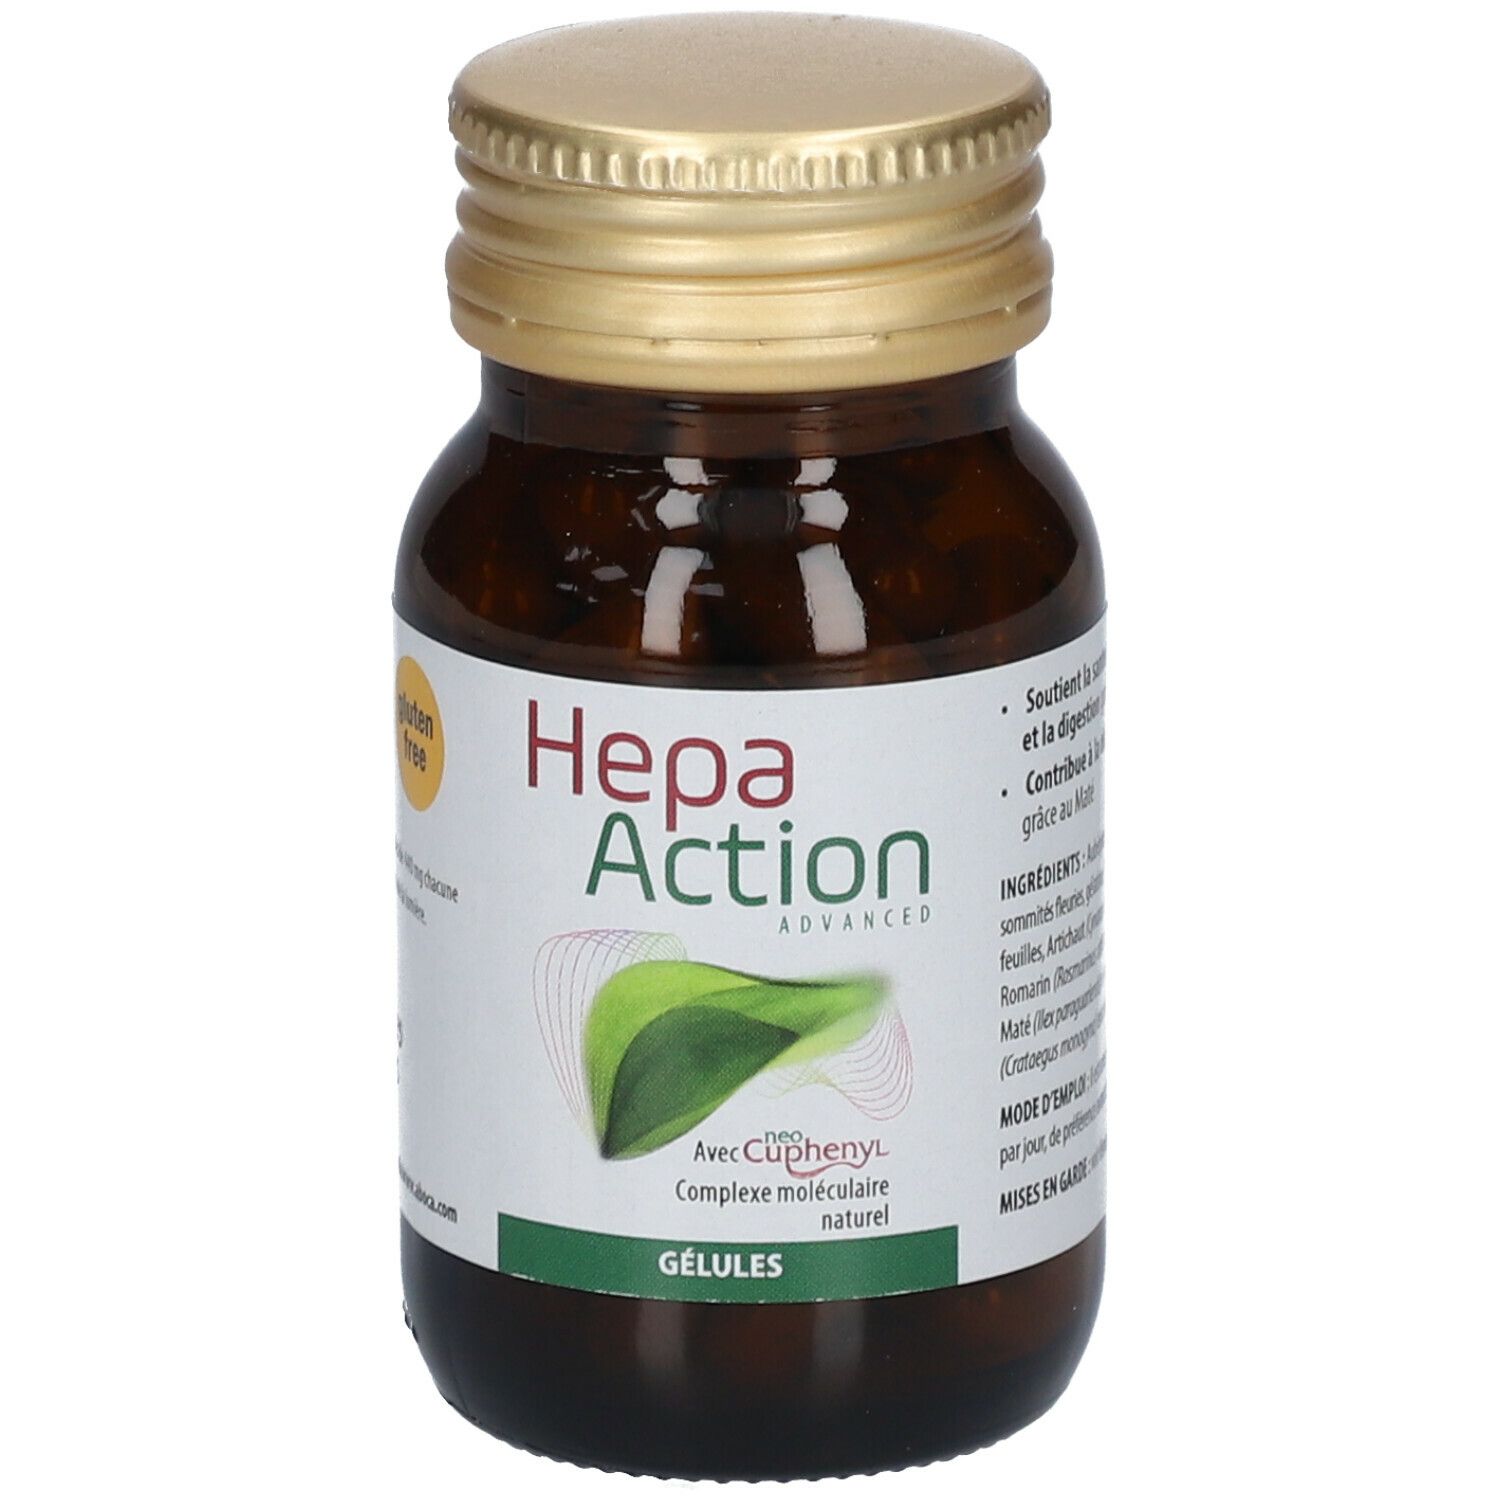 Aboca Hepa Action Advanced Gélules